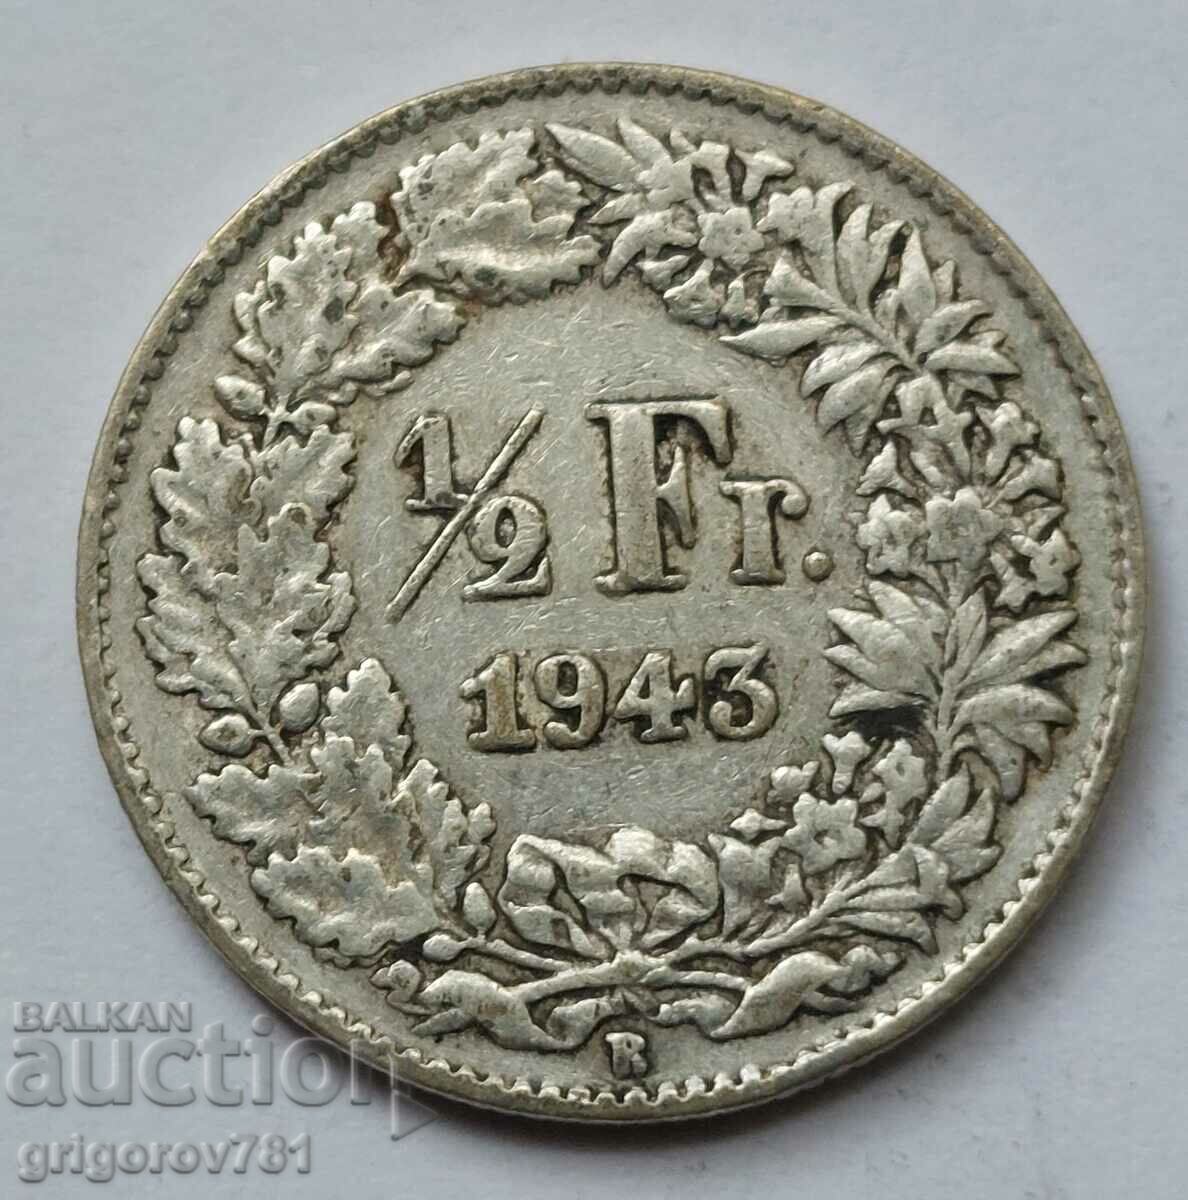 1/2 Franc Silver Switzerland 1943 B - Silver Coin #73